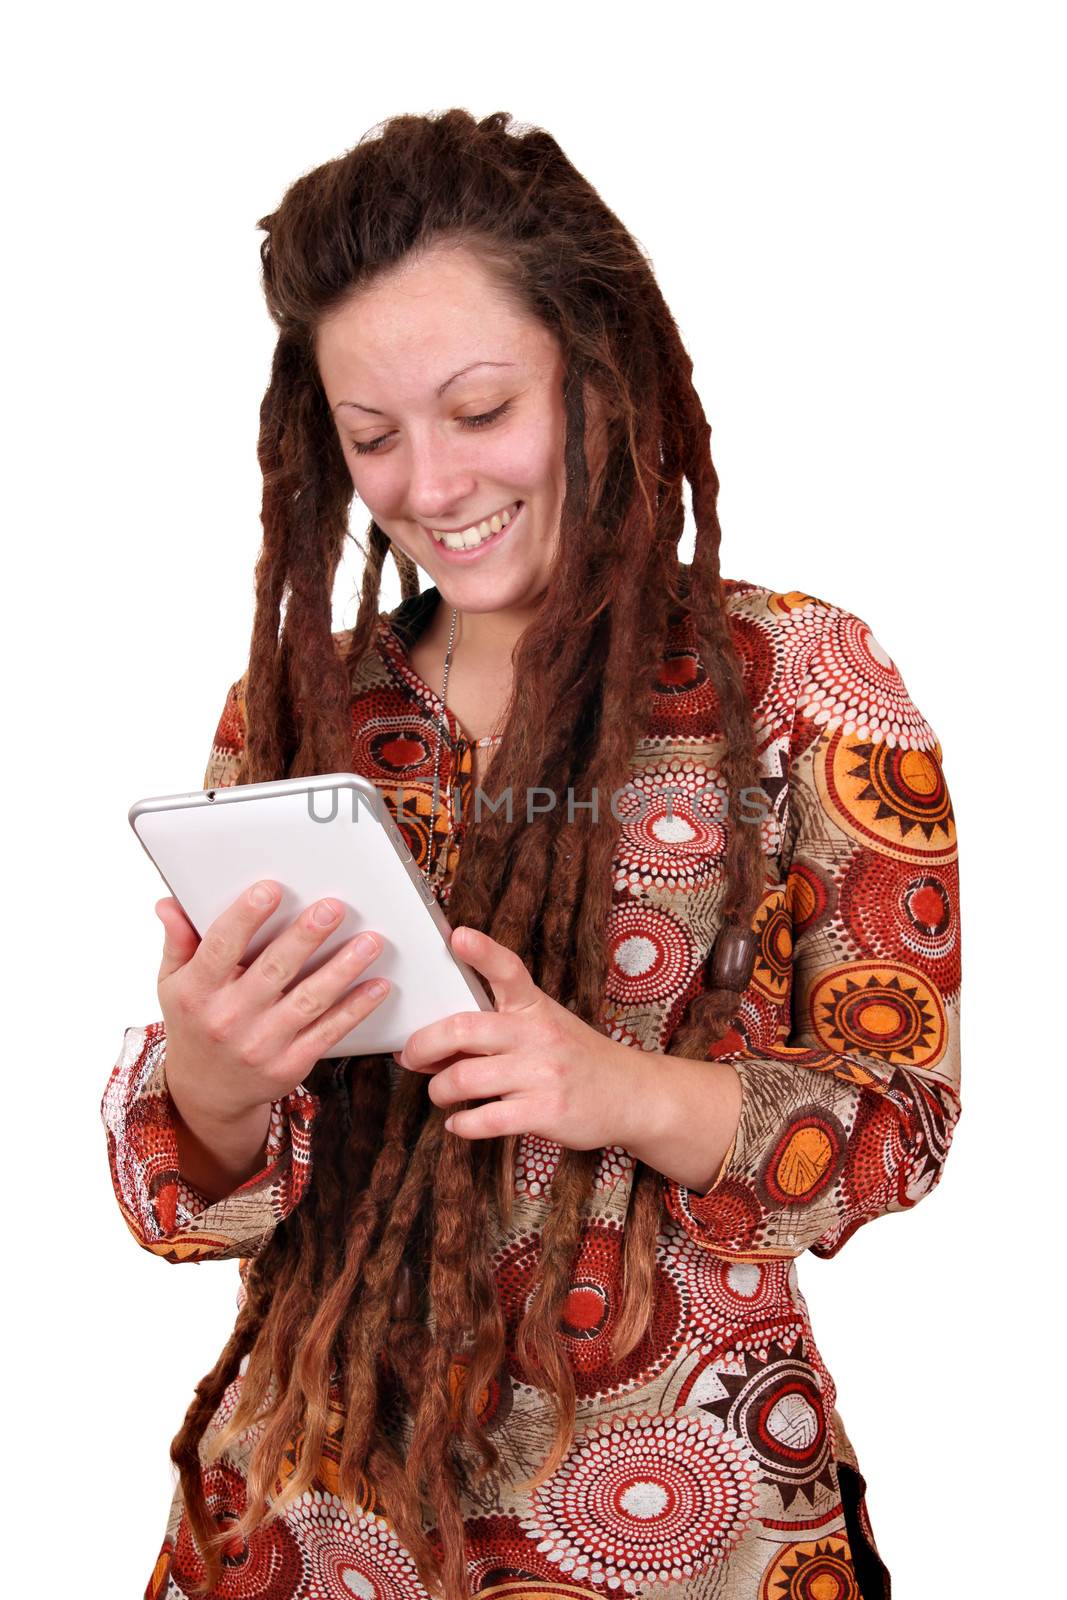 happy girl with dreadlocks hair play tablet pc